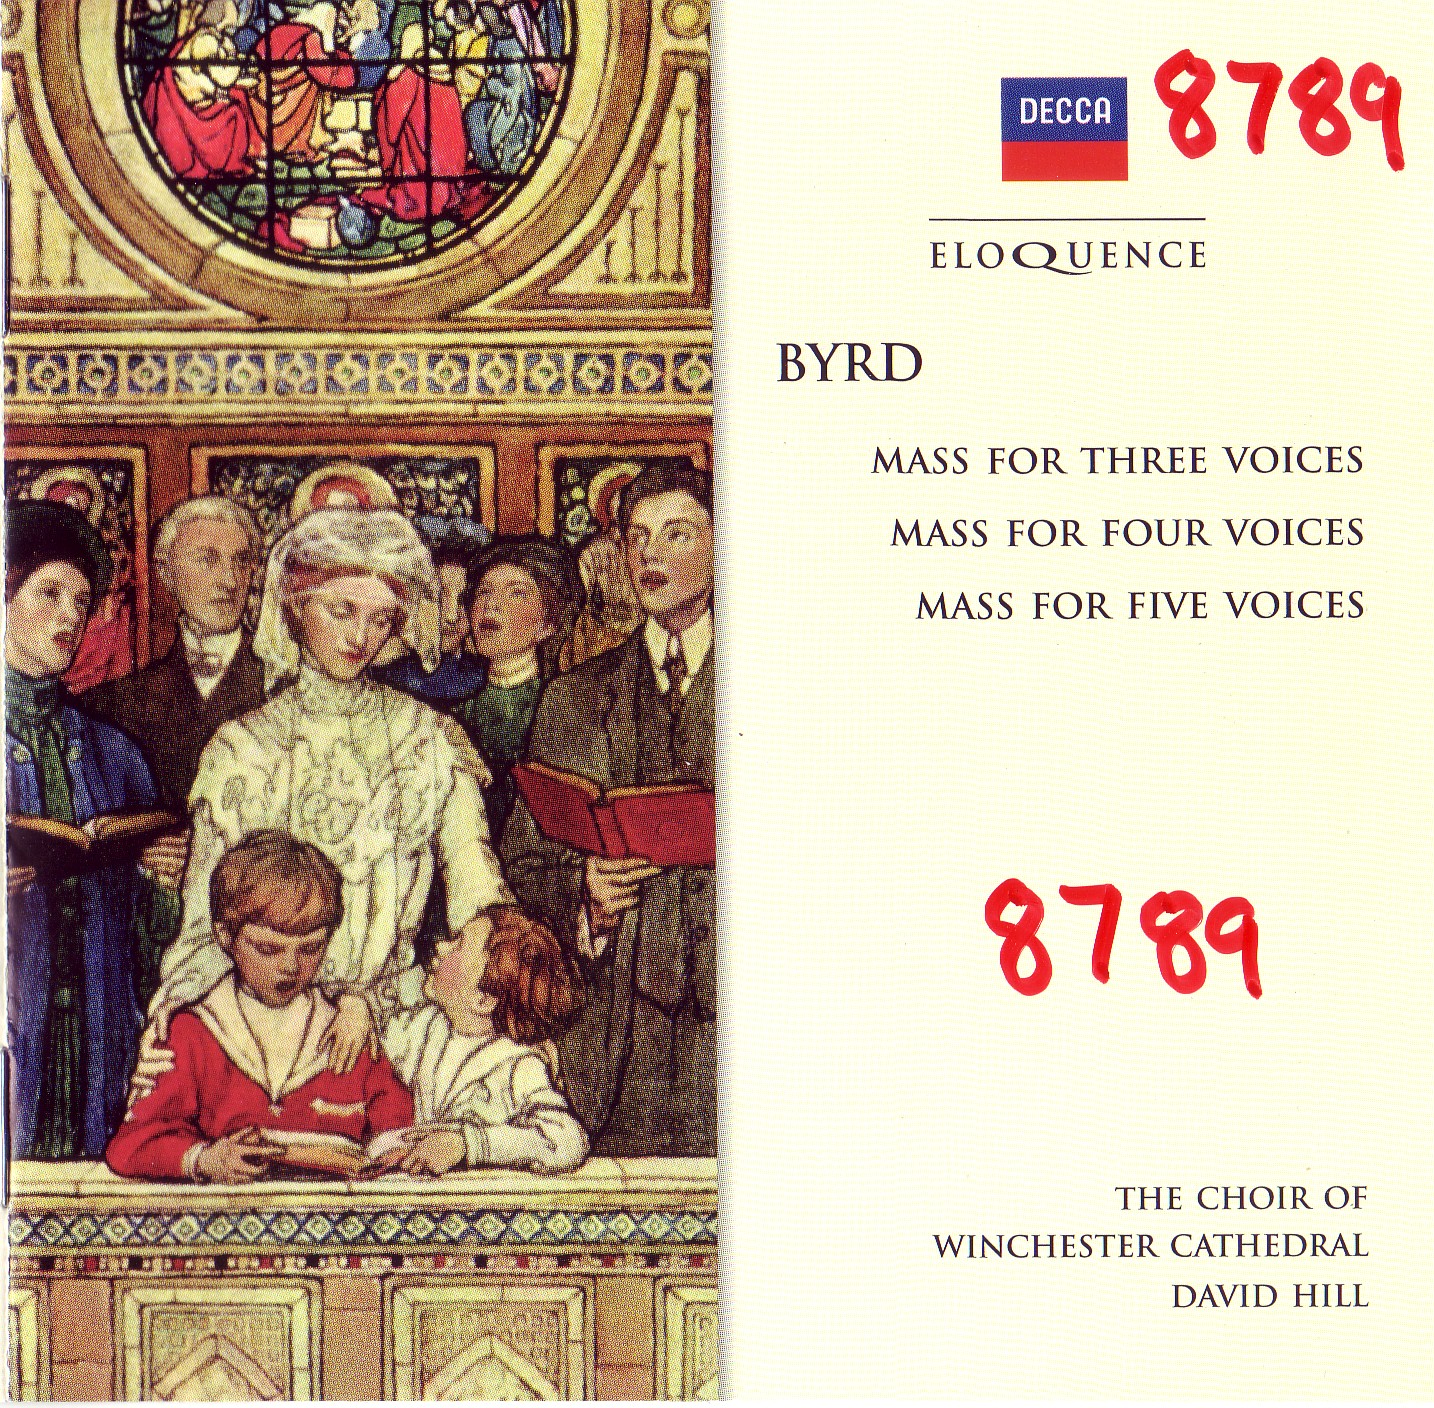 Byrd - The Three Masses